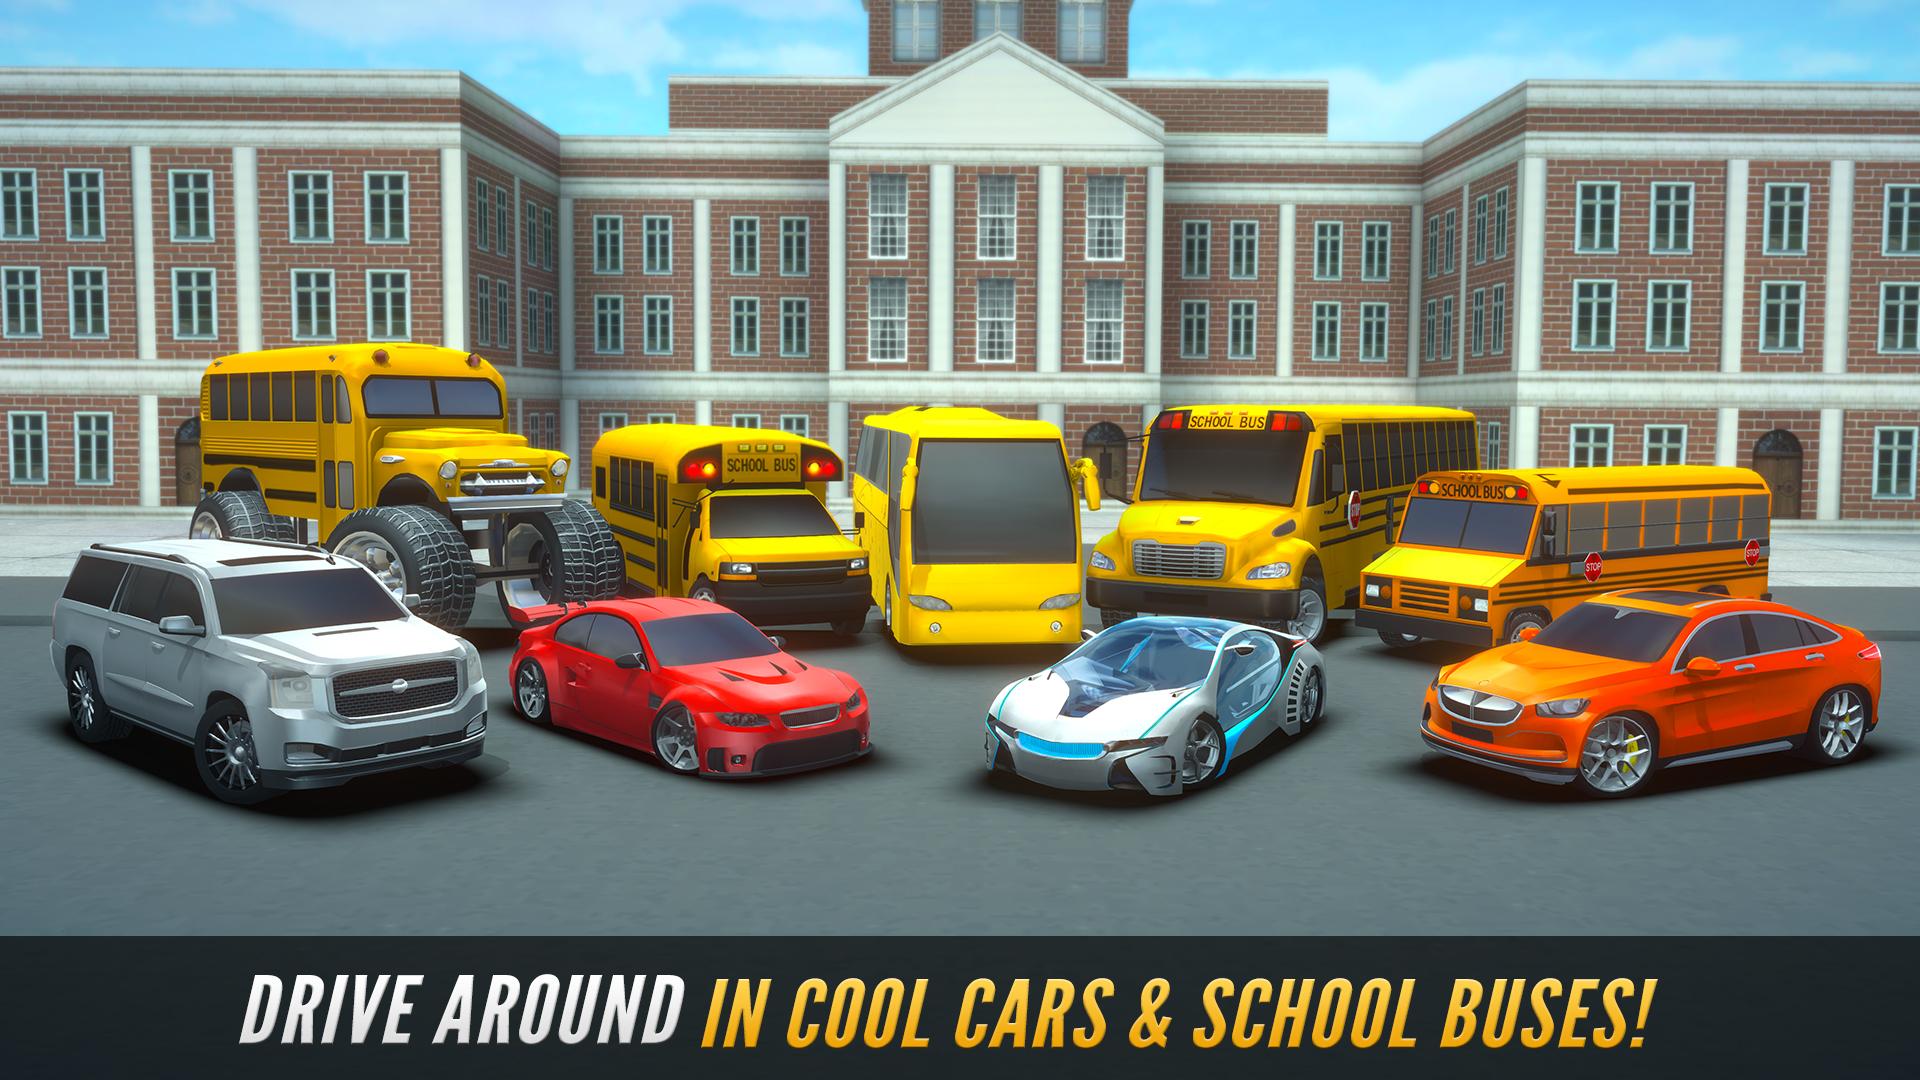 Super High School Bus Driving Simulator 3D - 2020 2.5 Screenshot 12